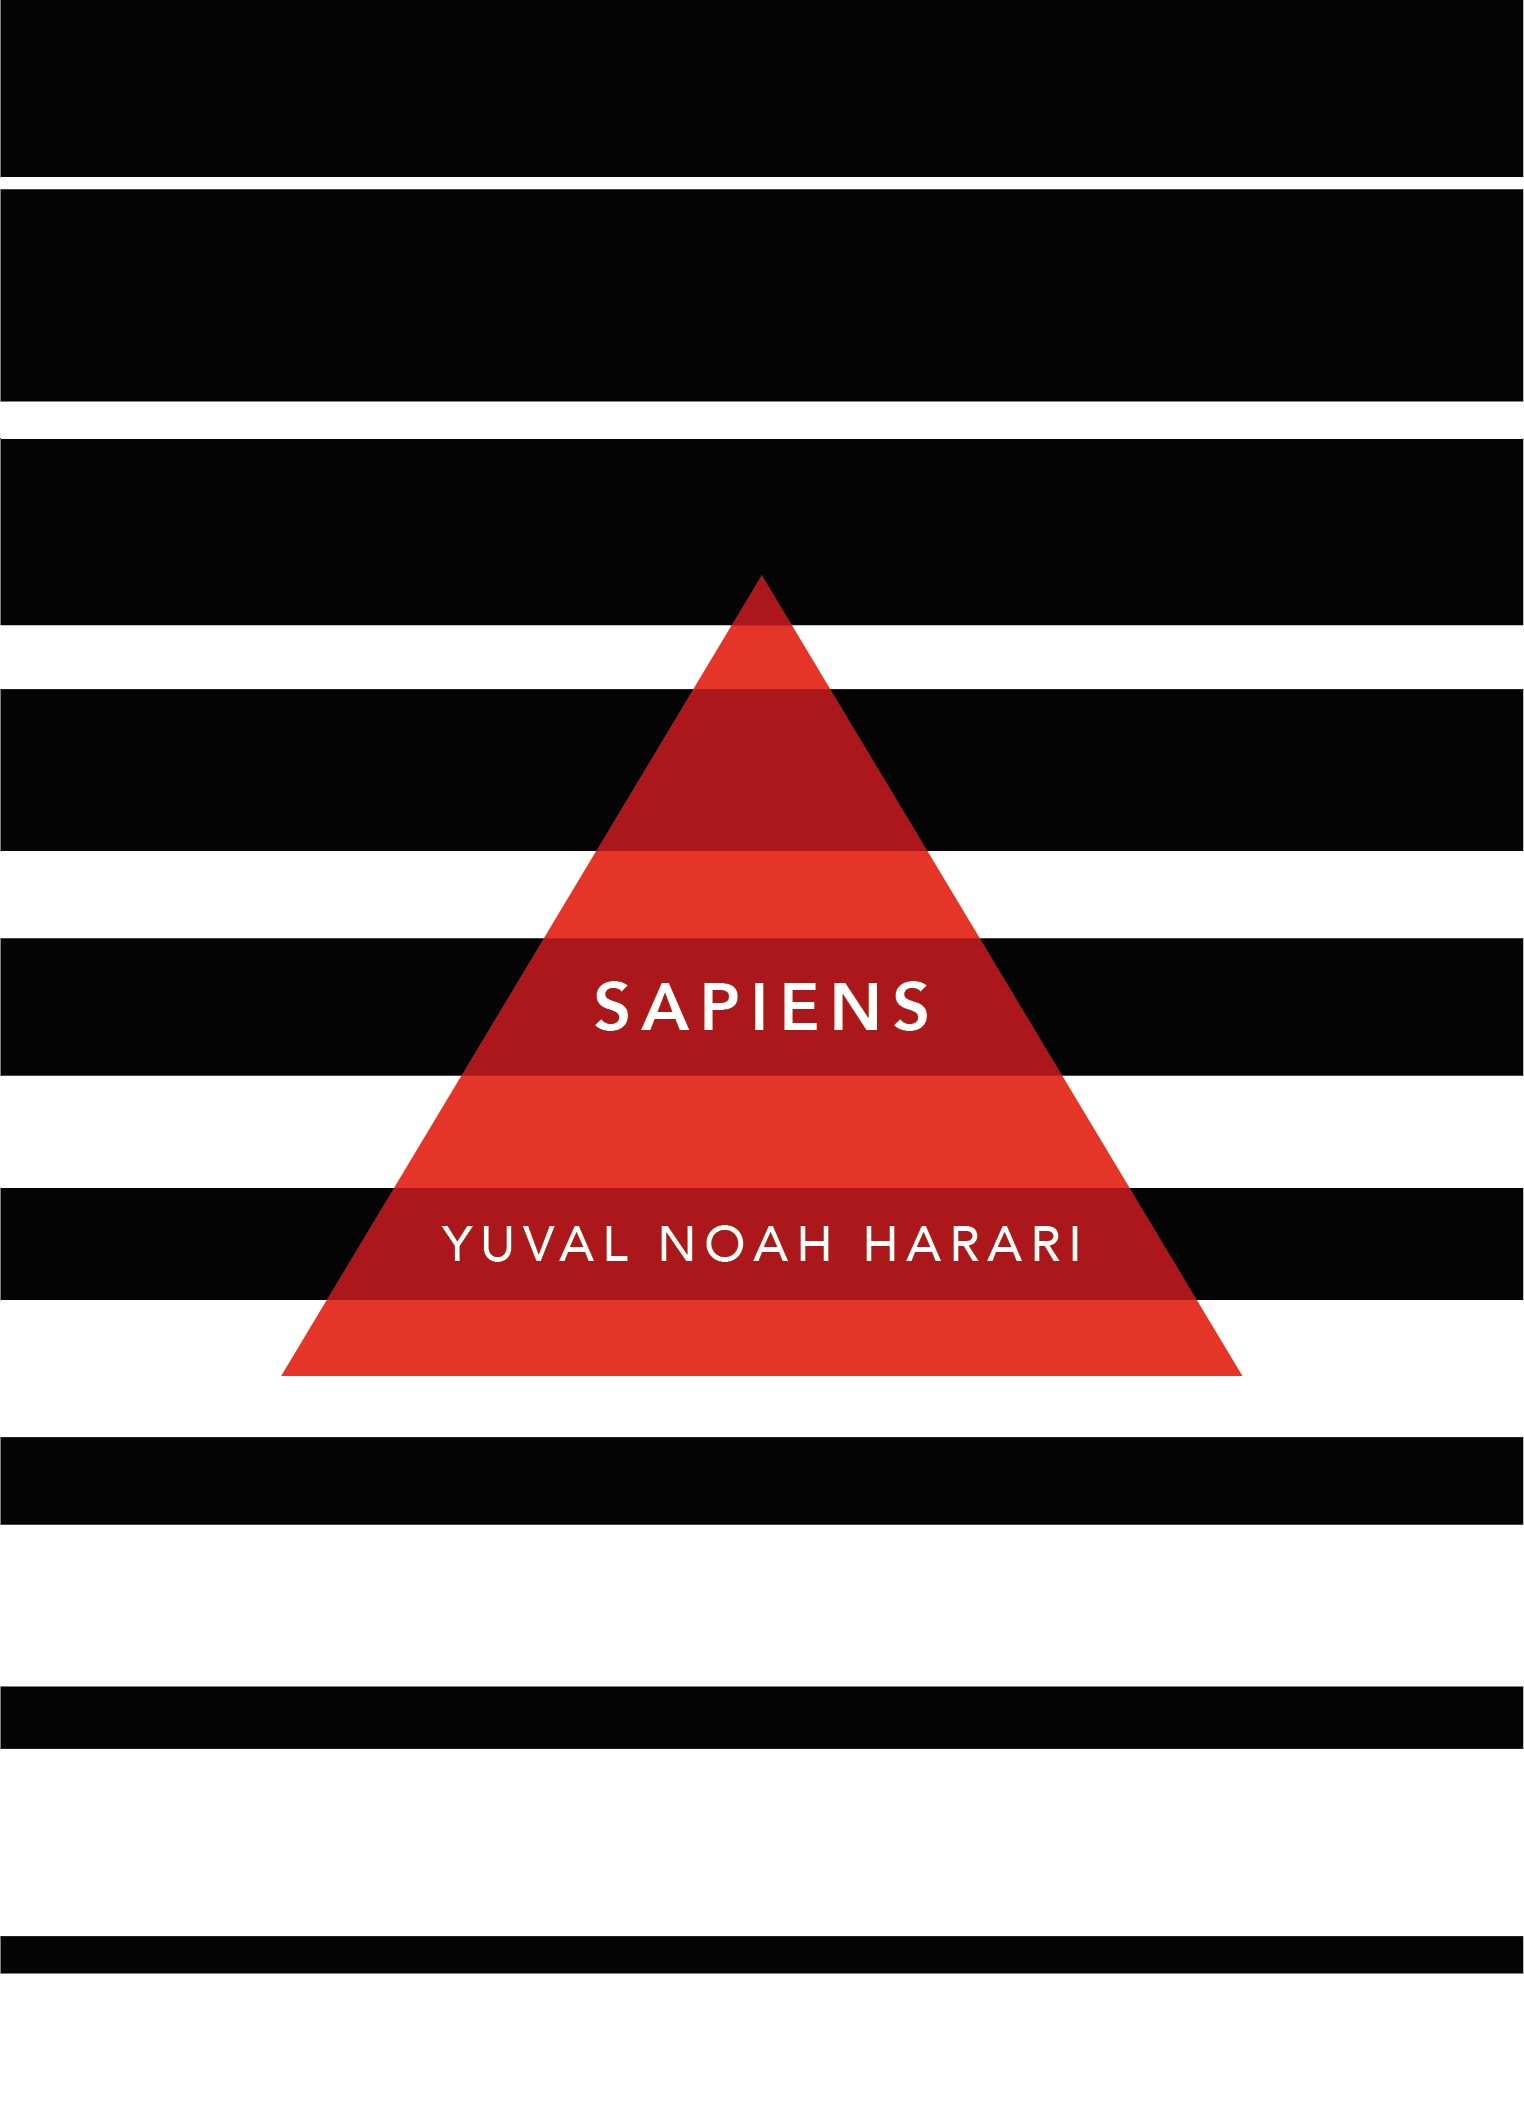 Book “Sapiens” by Yuval Noah Harari — January 10, 2019